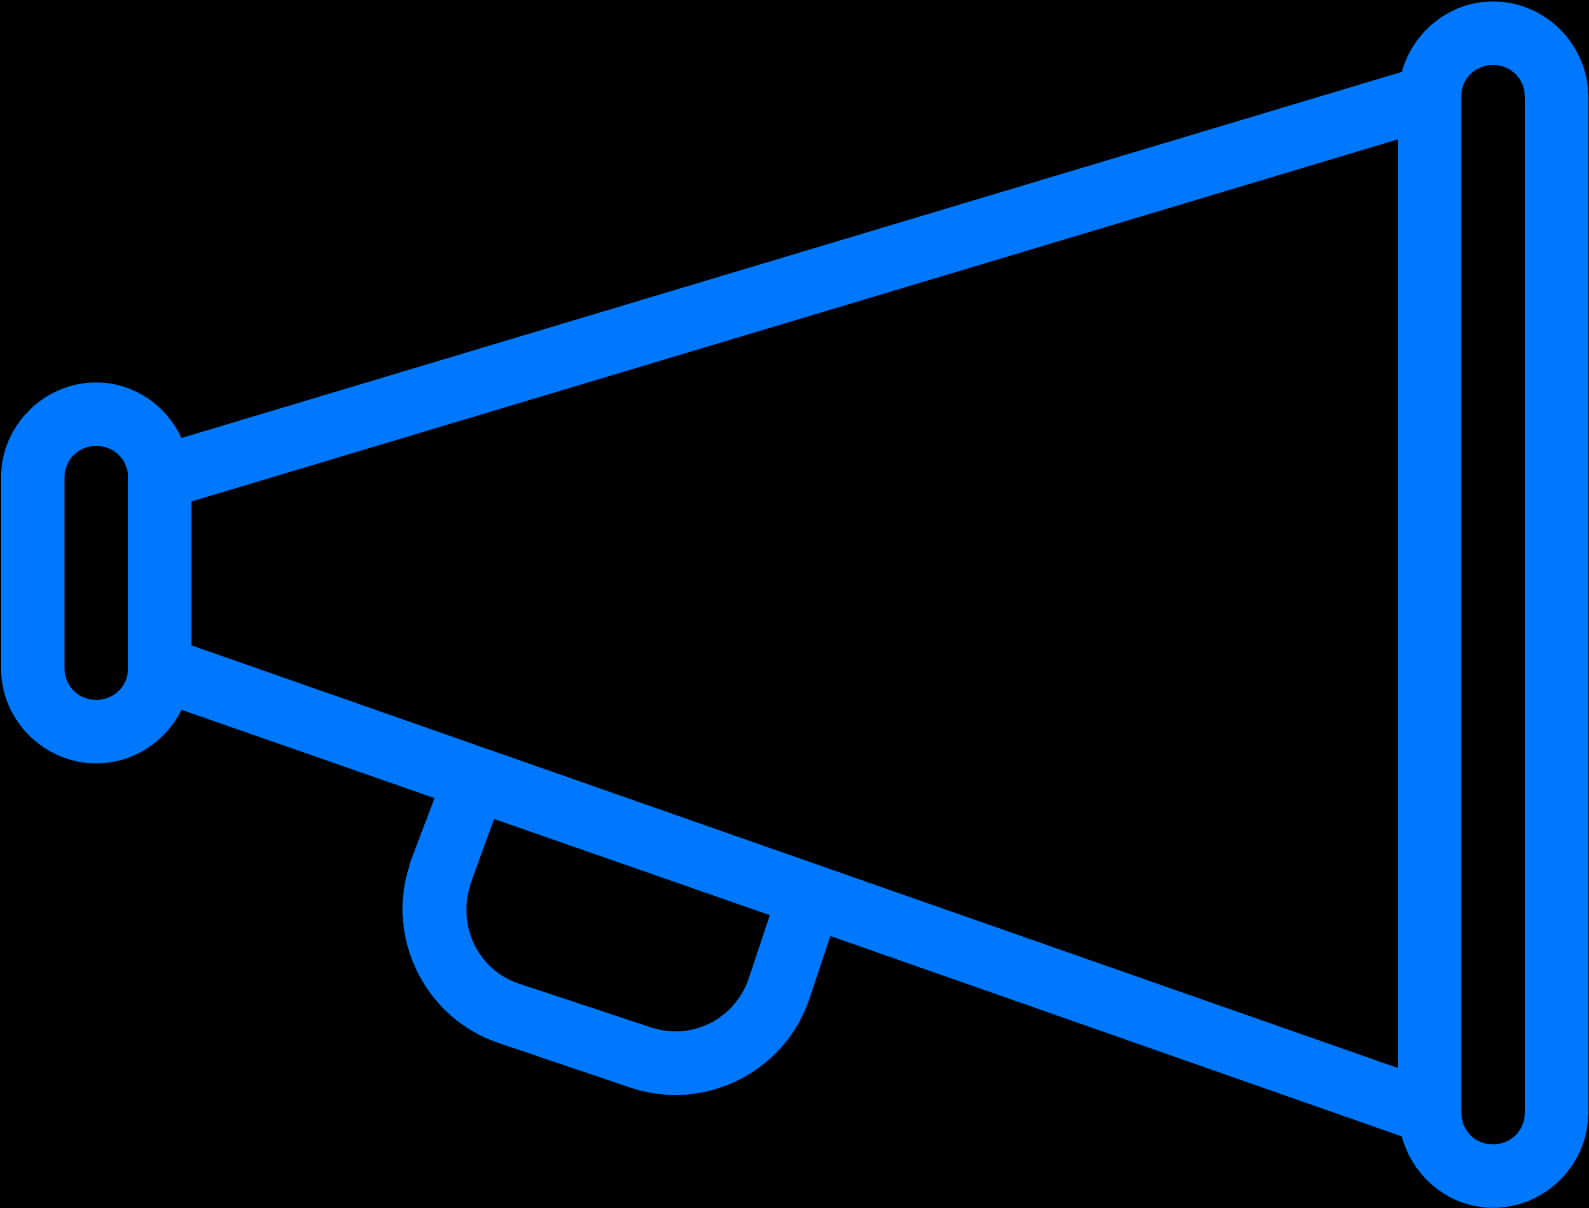 A Blue Megaphone On A Black Background